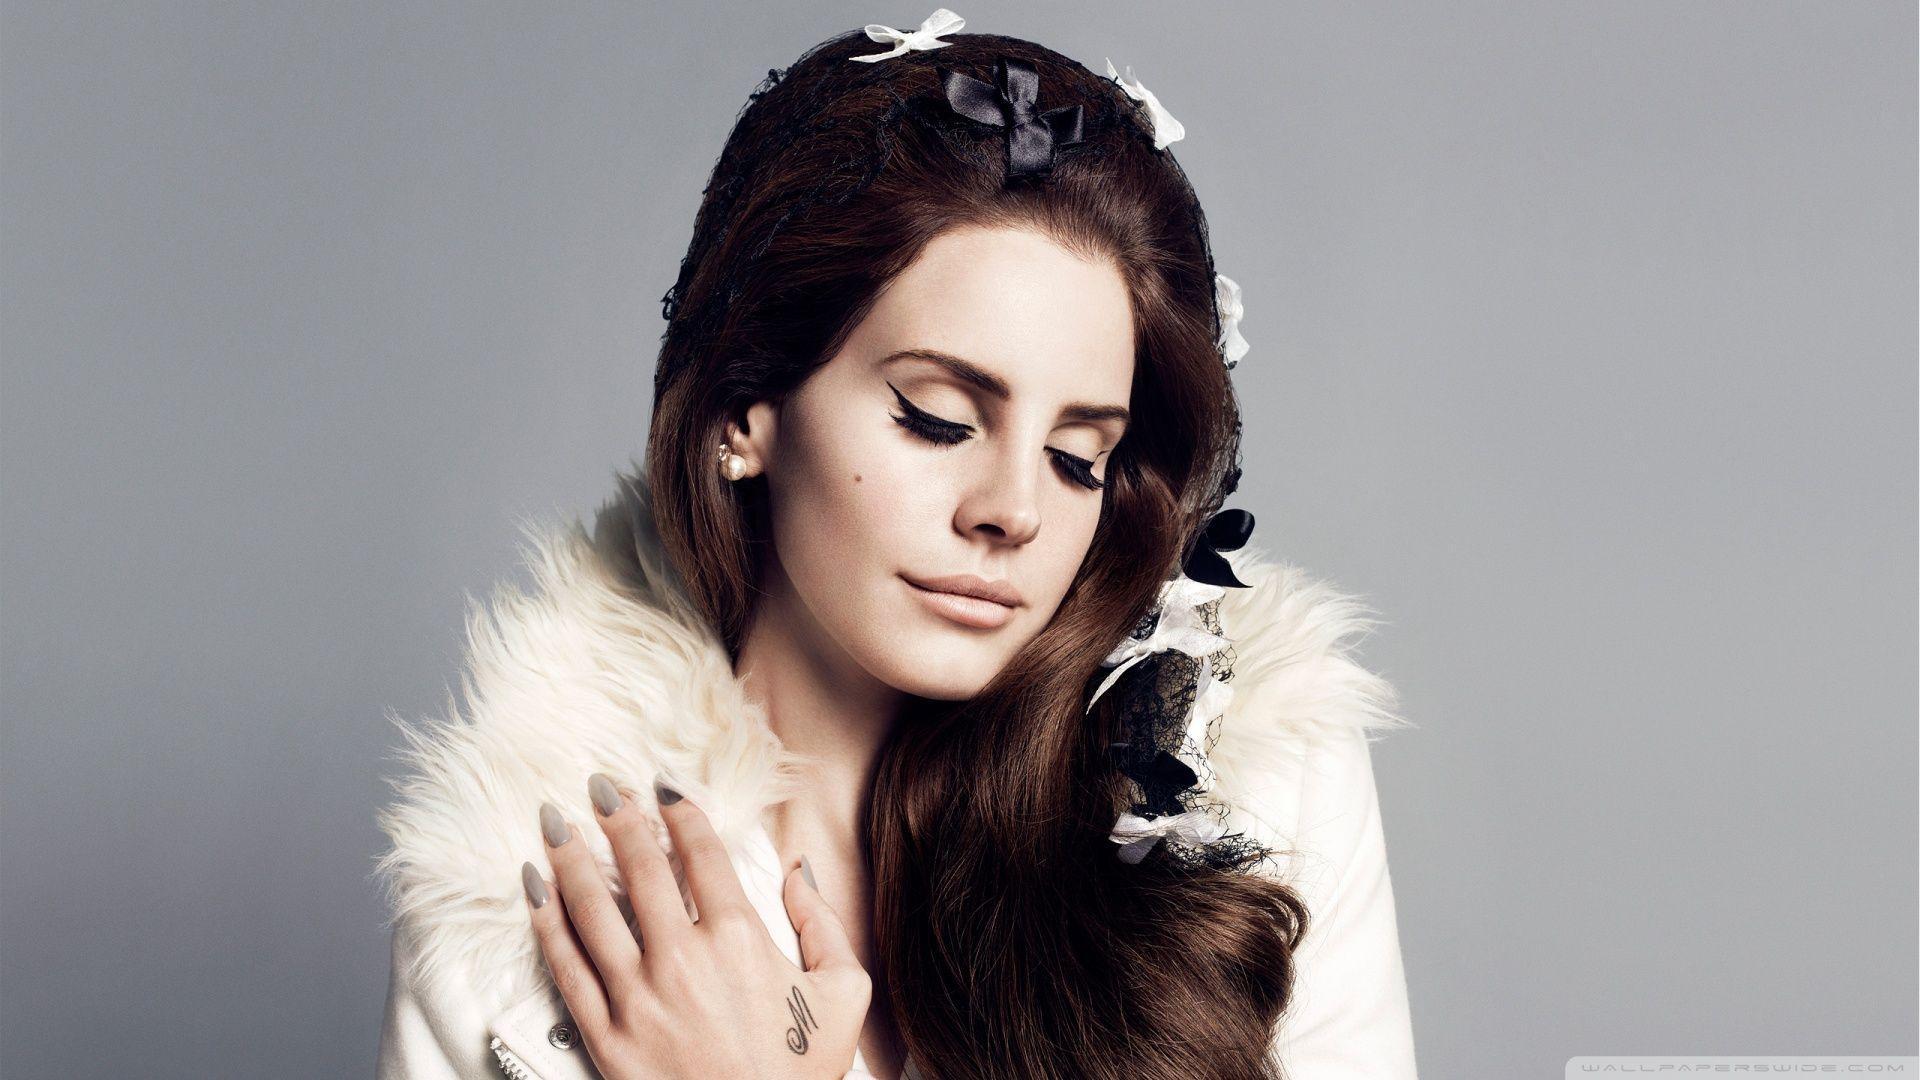 Lana Del Rey Portrait HD desktop wallpaper, High Definition